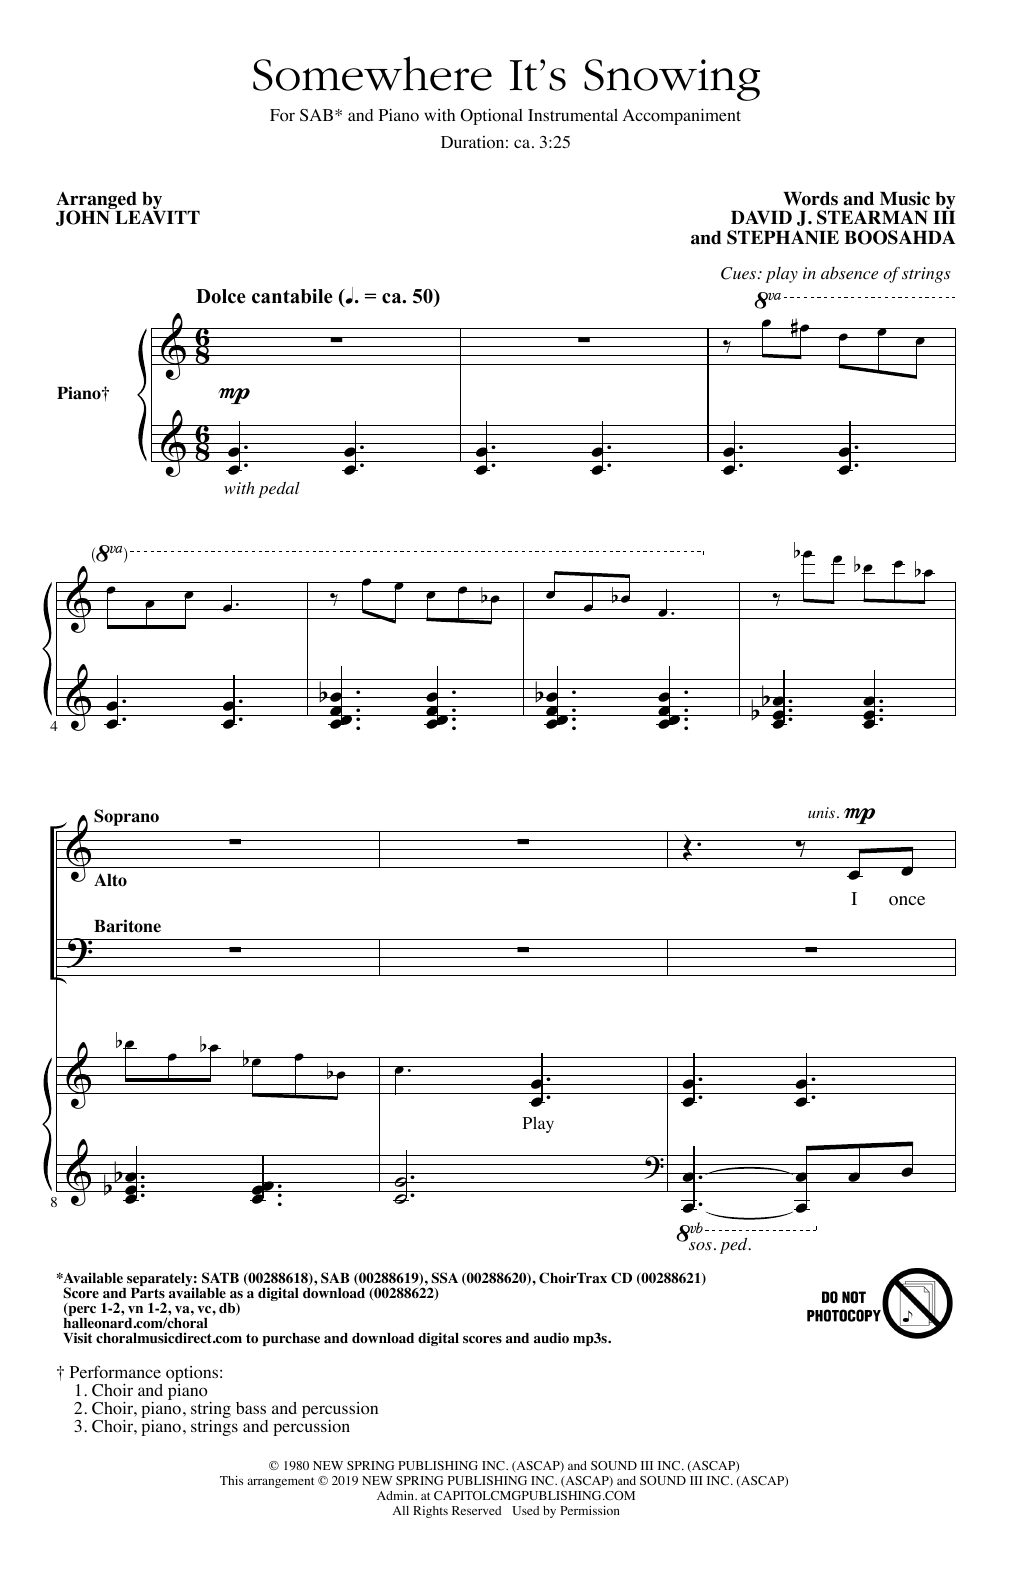 David J. Stearman III & Stephanie Boosahda Somewhere It's Snowing (arr. John Leavitt) Sheet Music Notes & Chords for SATB Choir - Download or Print PDF